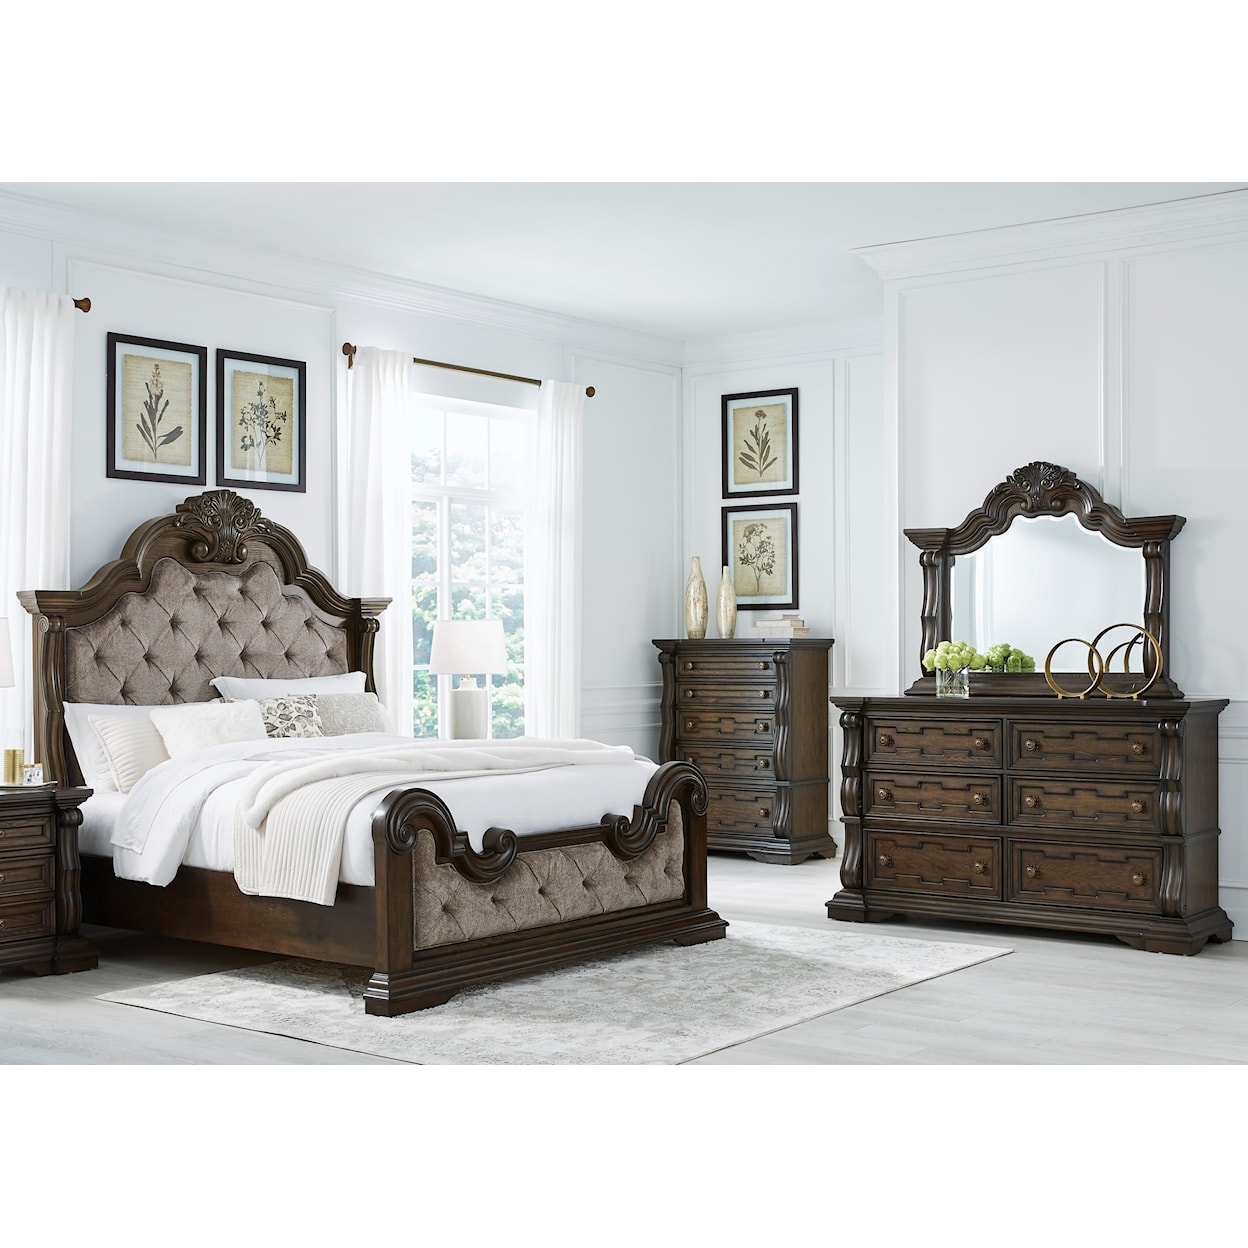 Ashley Furniture Signature Design Maylee California King Bedroom Set